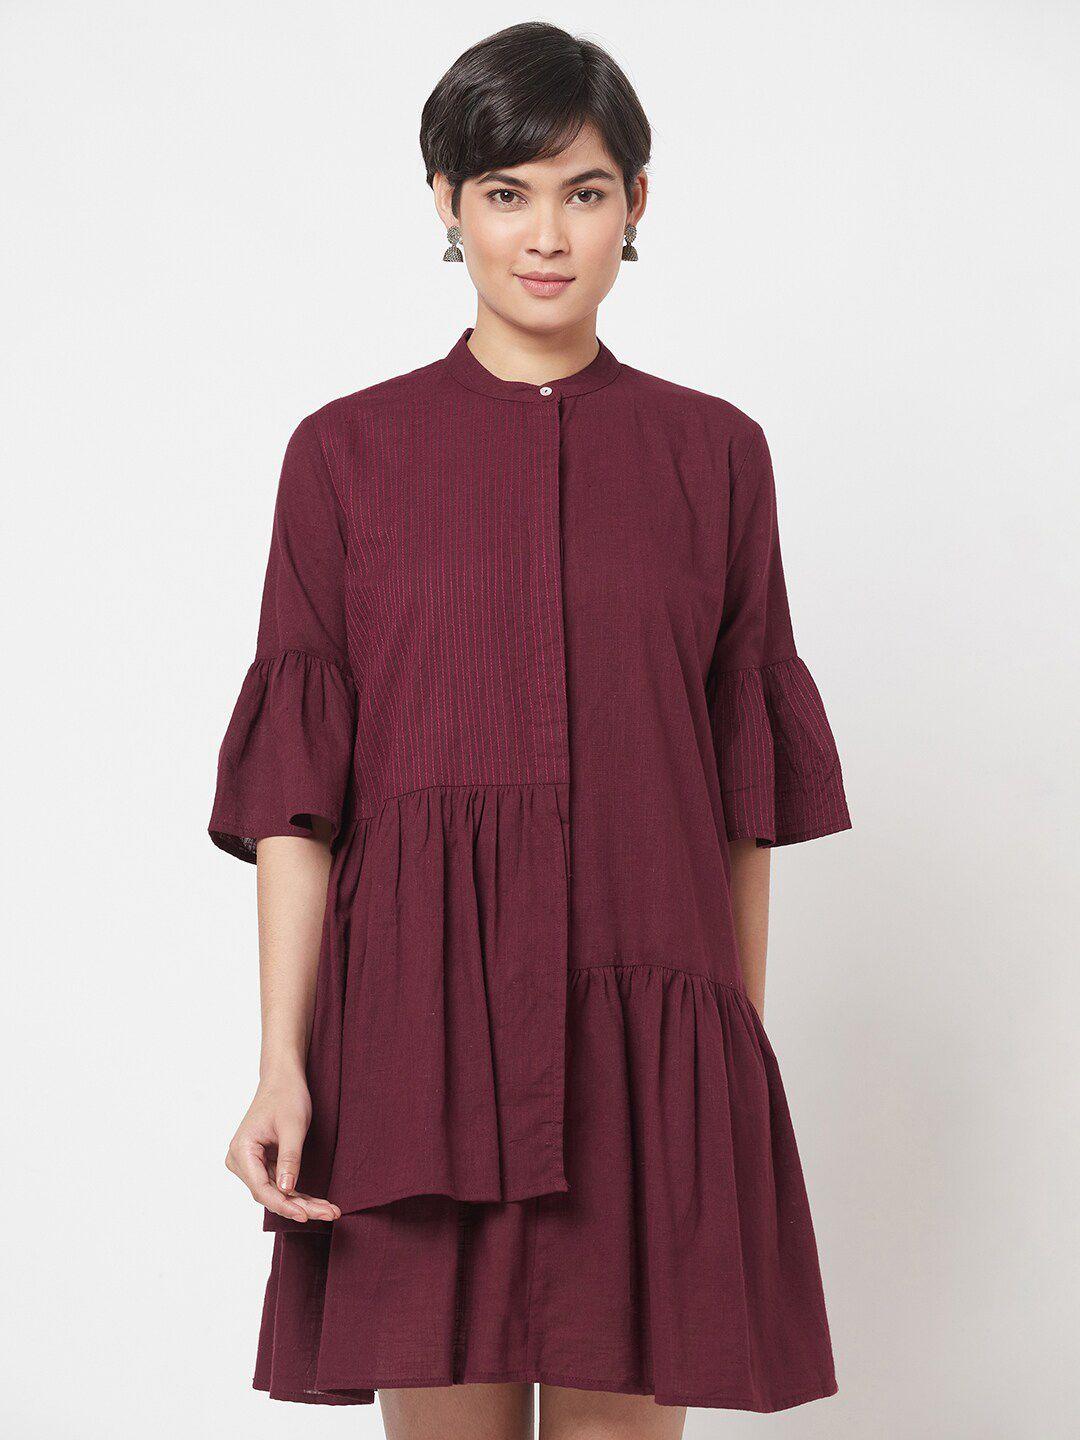 fabindia-maroon-a-line-bell-sleeves-dress